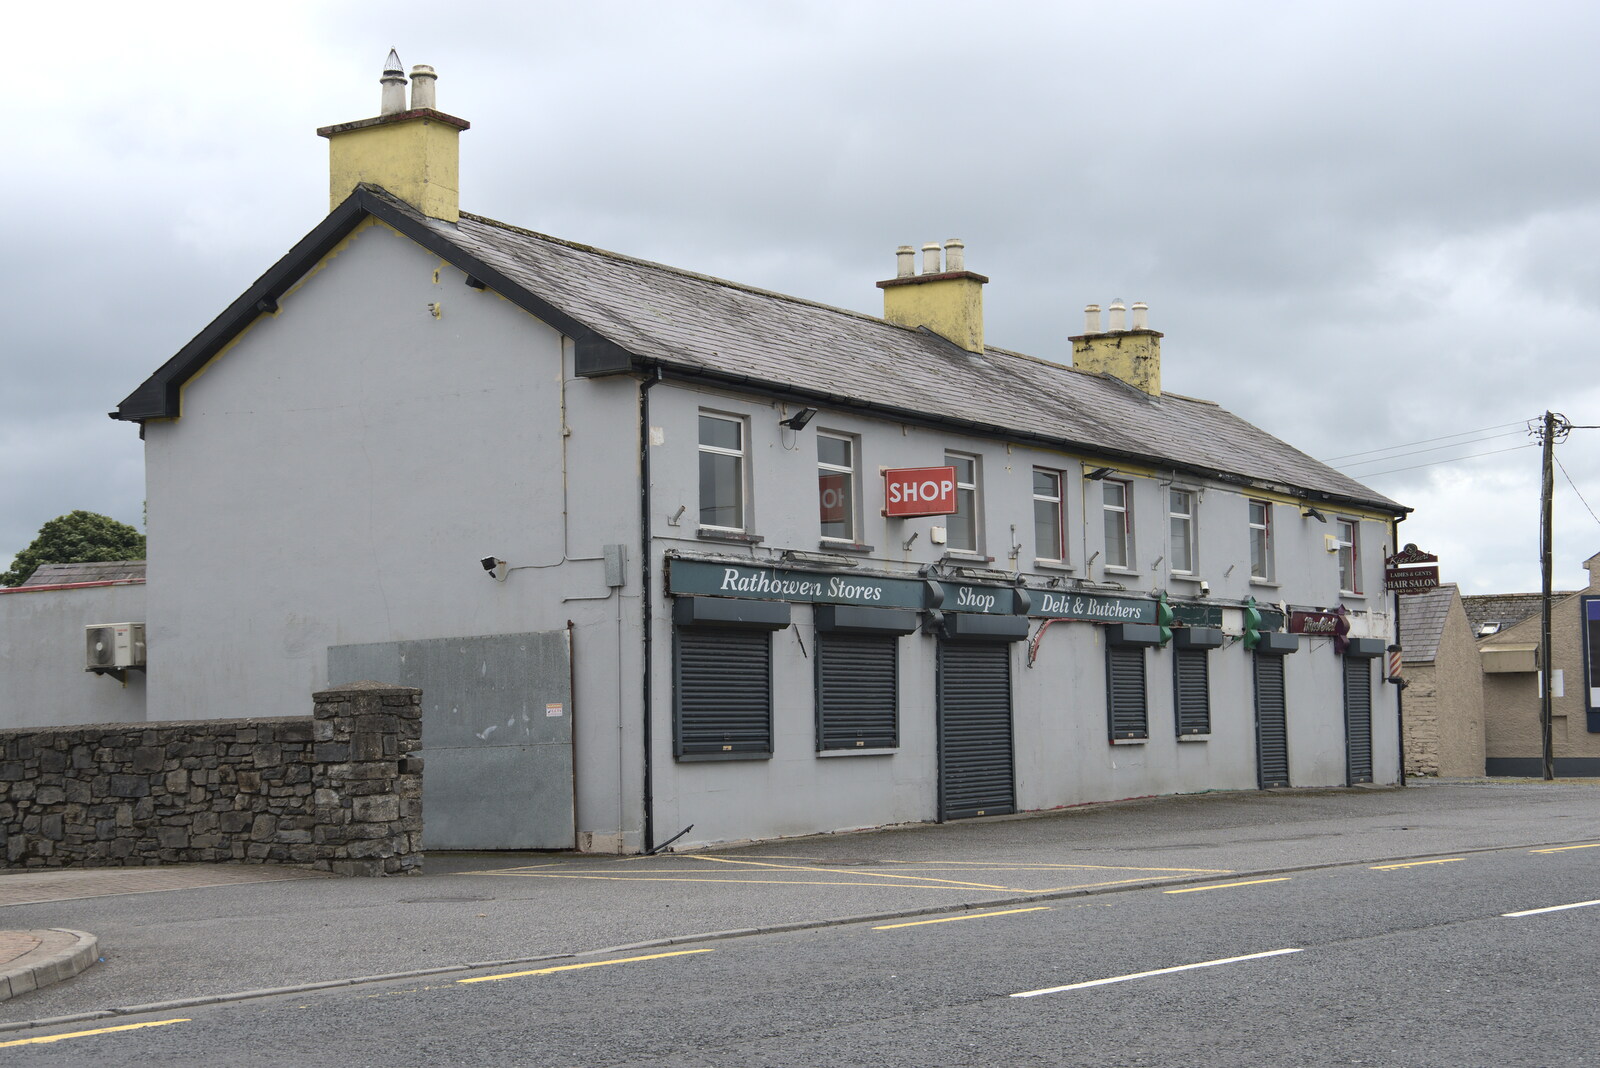 Pints of Guinness and Streedagh Beach, Grange and Sligo, Ireland - 9th August 2021: A derelict shop at Rathowen